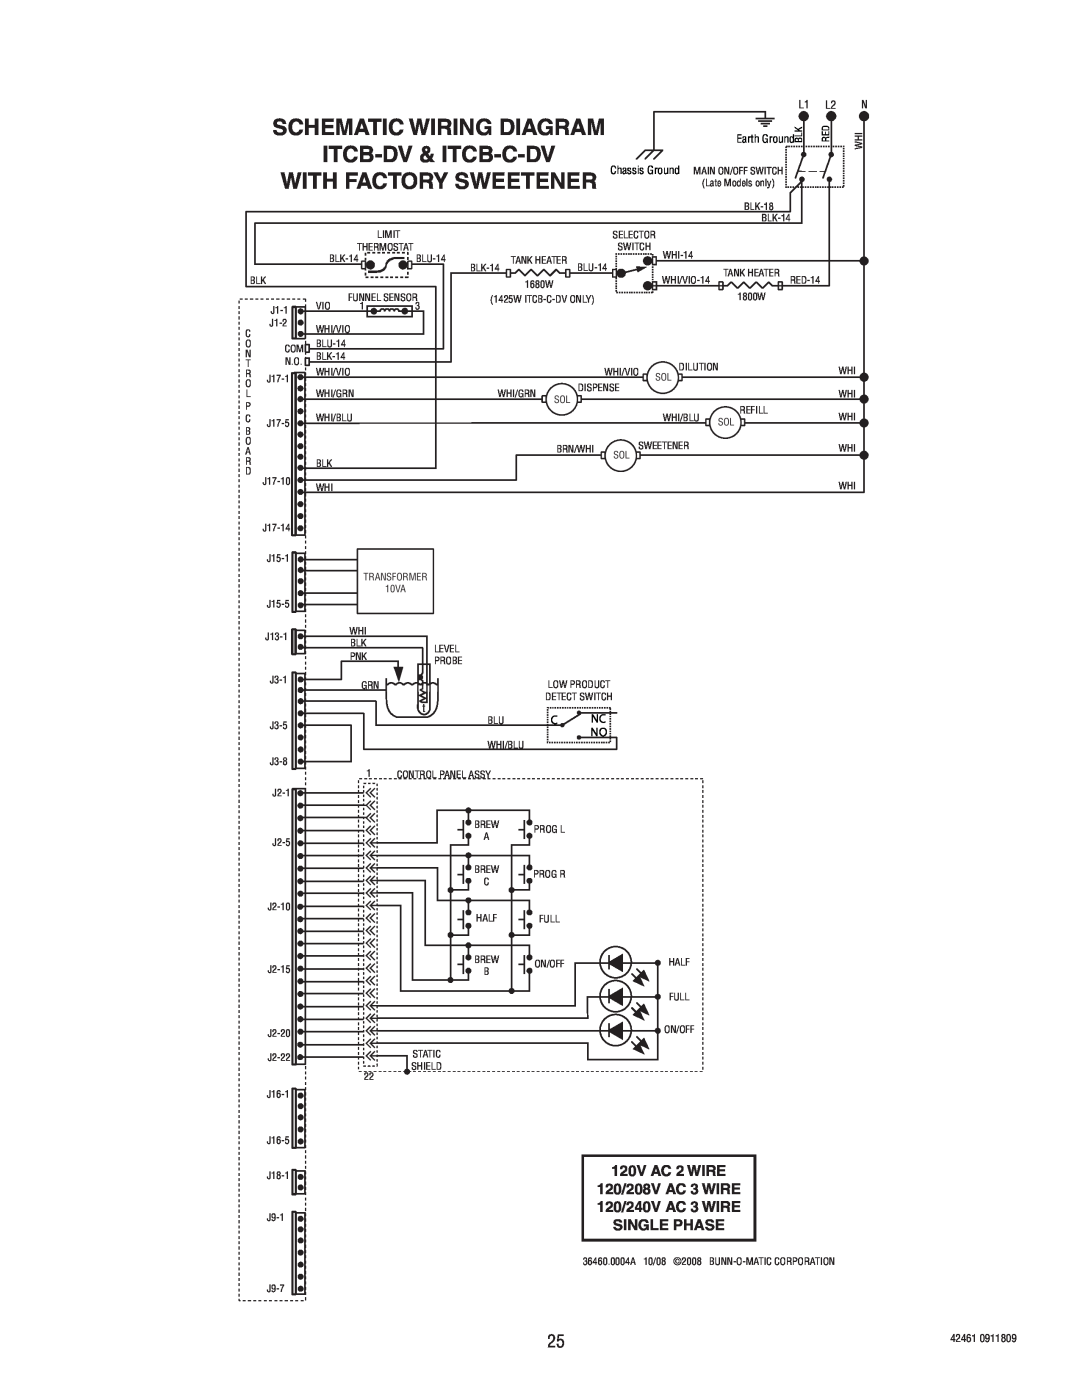 Bunn ITB/ITCB, ICB/TWIN manual With Factory Sweetener, Schematic Wiring Diagram, Itcb-Dv & Itcb-C-Dv 